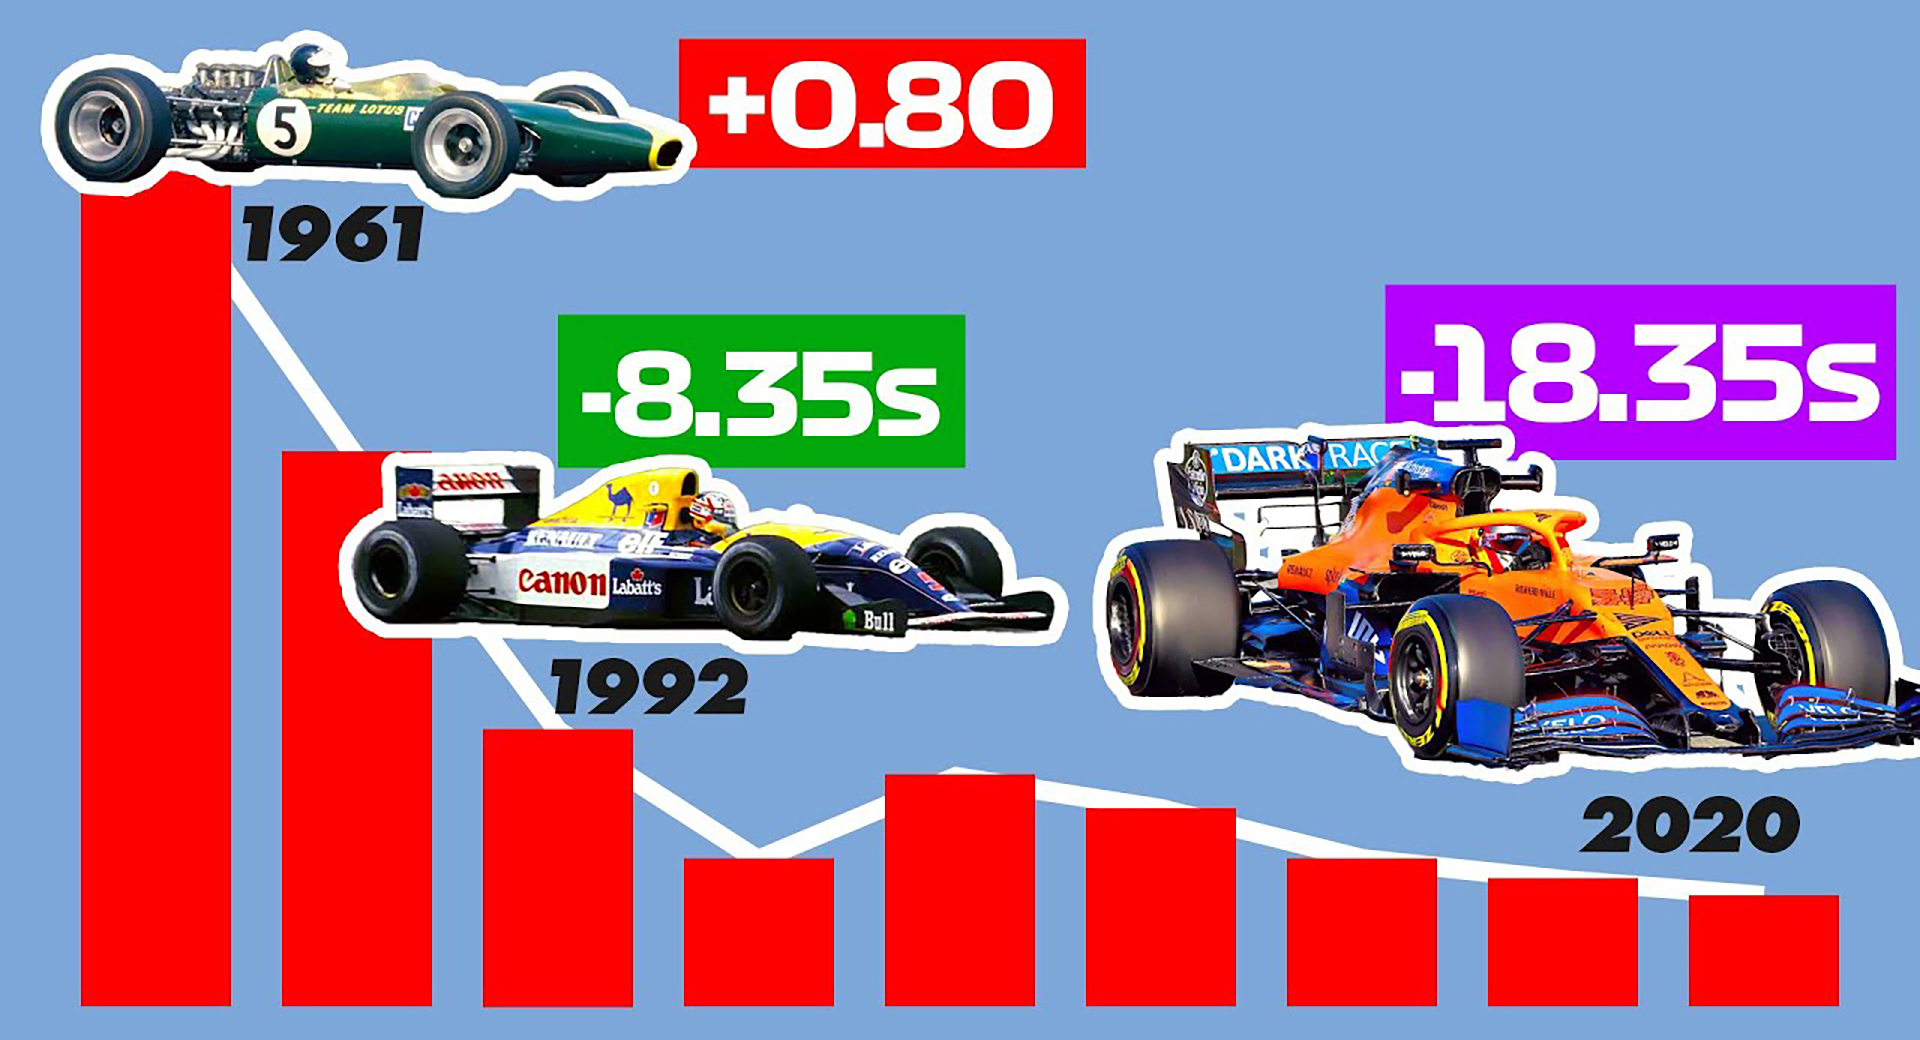 How Fast Do F1 Cars Go?